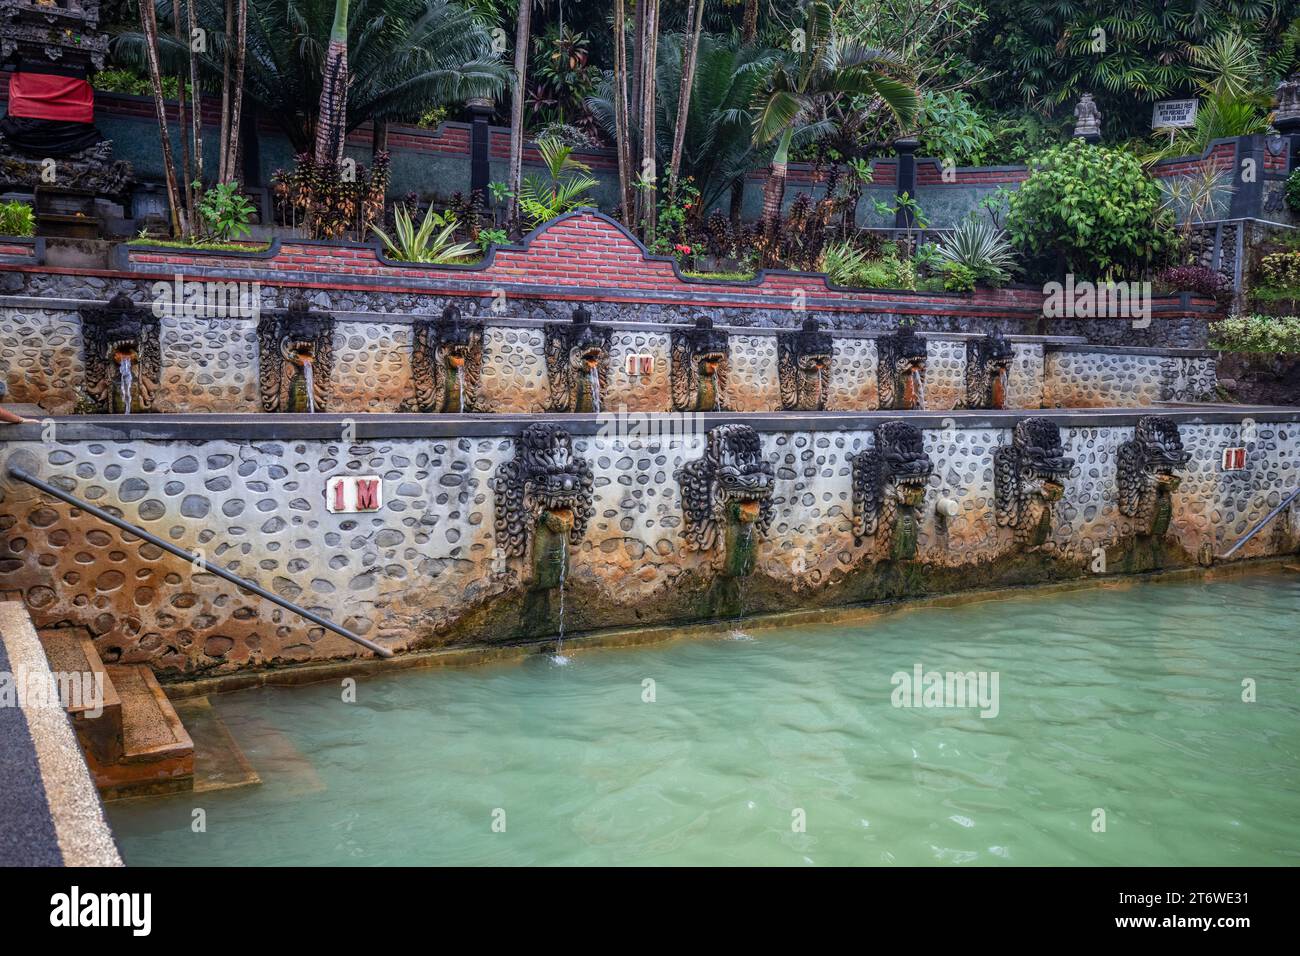 Hot springs, thermal bath in the tropical jungle. Ritual sulphurous pool for swimming. Banjar, Bali Stock Photo